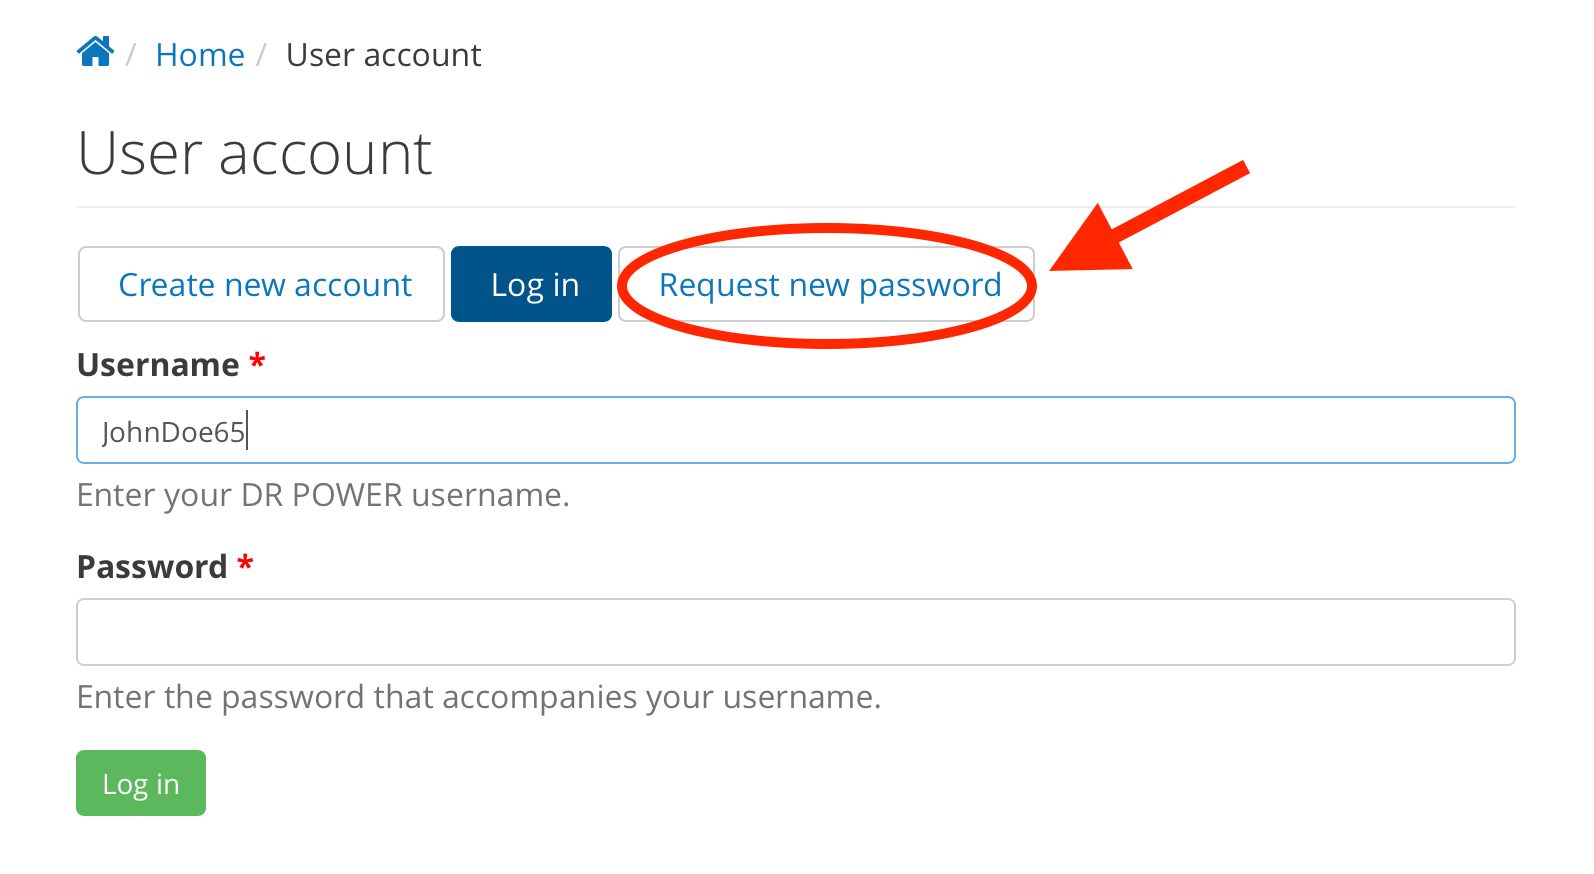 Request New Password